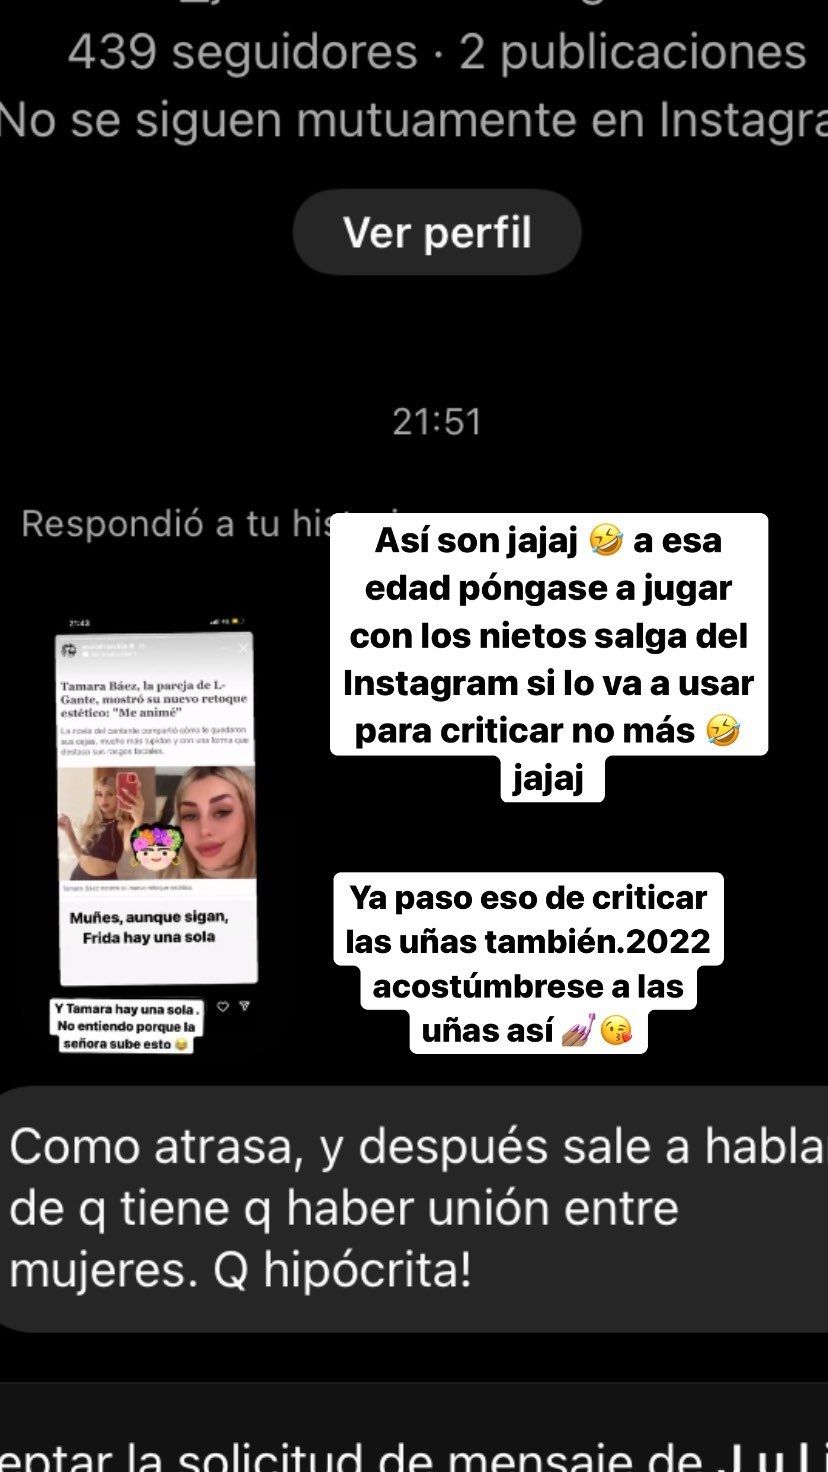 Tamara Báez le respondió las críticas a Analía Franchín: 